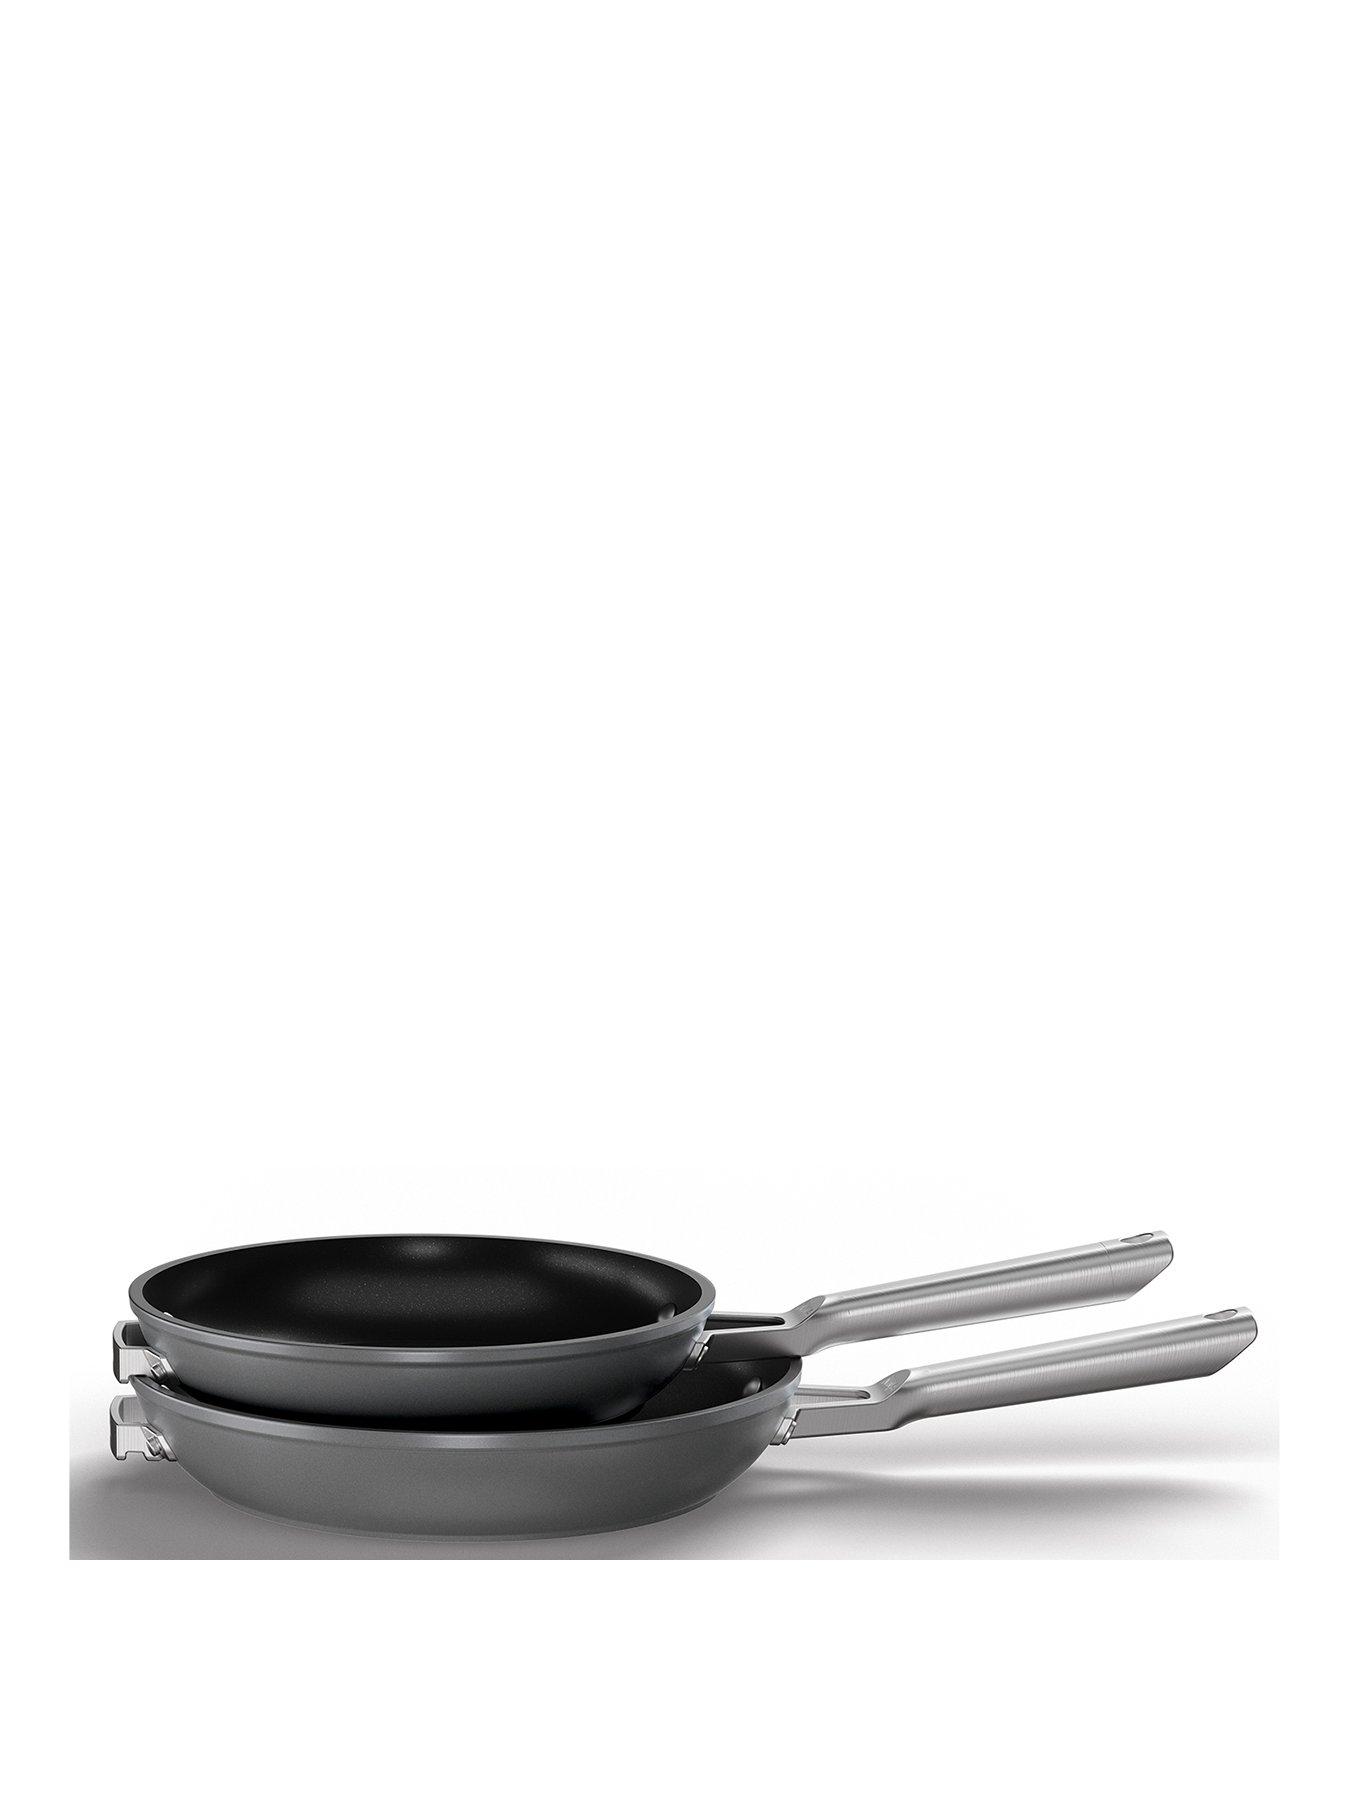 Tefal Jamie Oliver 23cm X 27cm Cast Aluminium Grill Pan with Thermospot